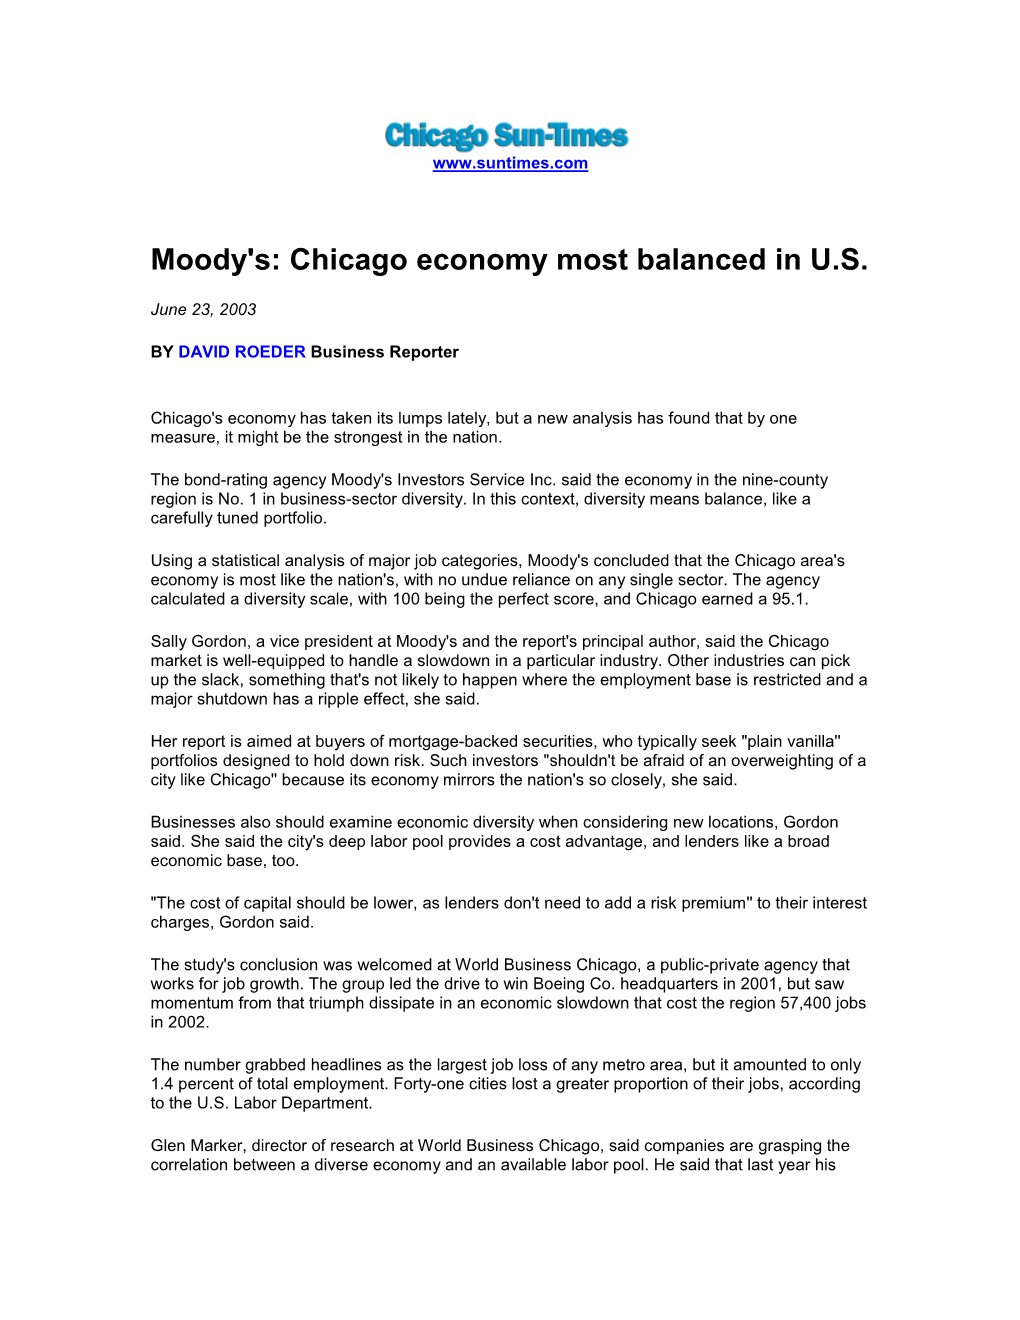 Moody's: Chicago Economy Most Balanced in U.S.